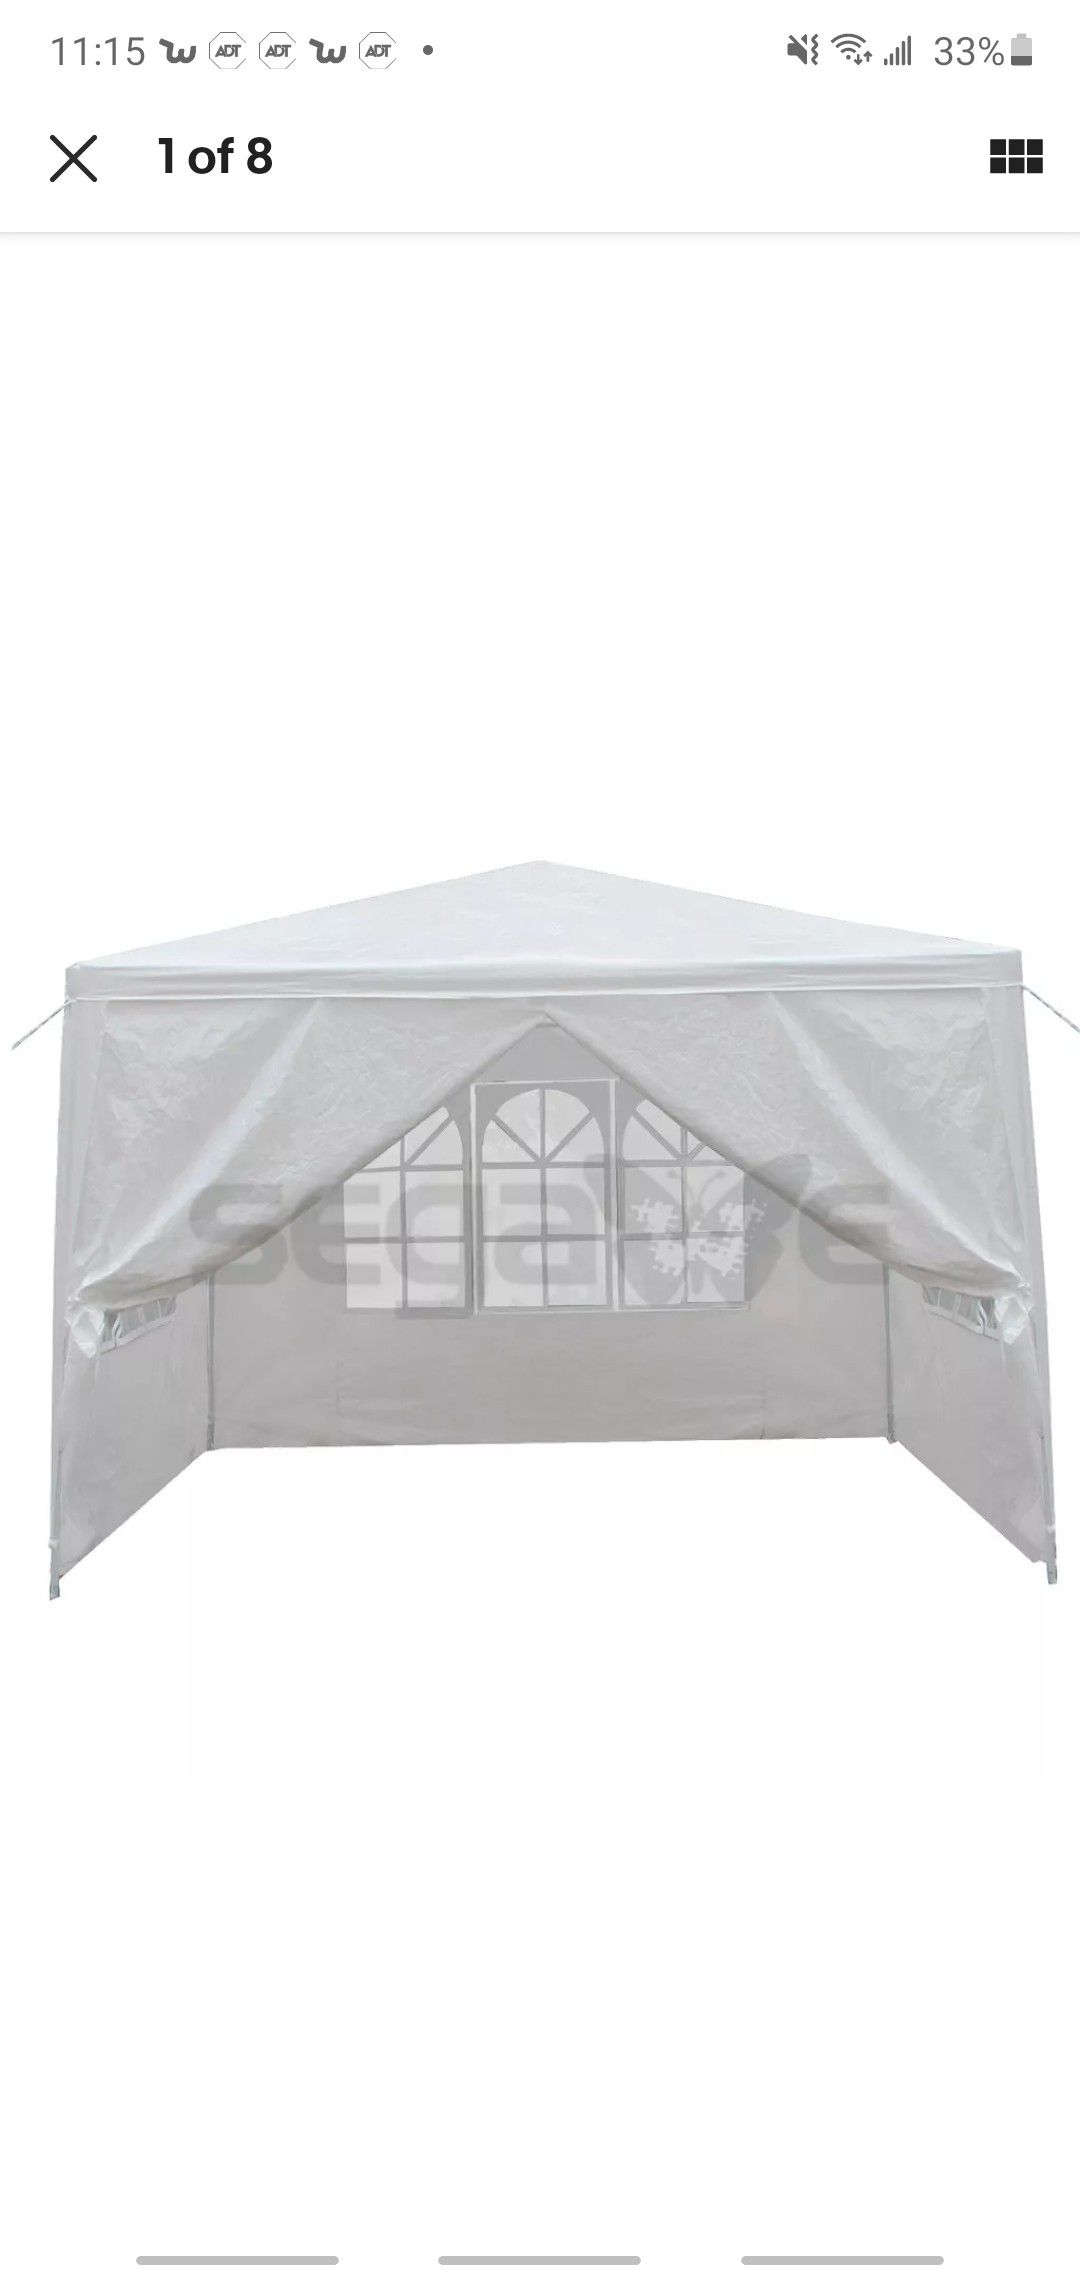 10' x 10' Outdoor Canopy Party Wedding Tent Gazebo Pavilion w/4 Side Walls White